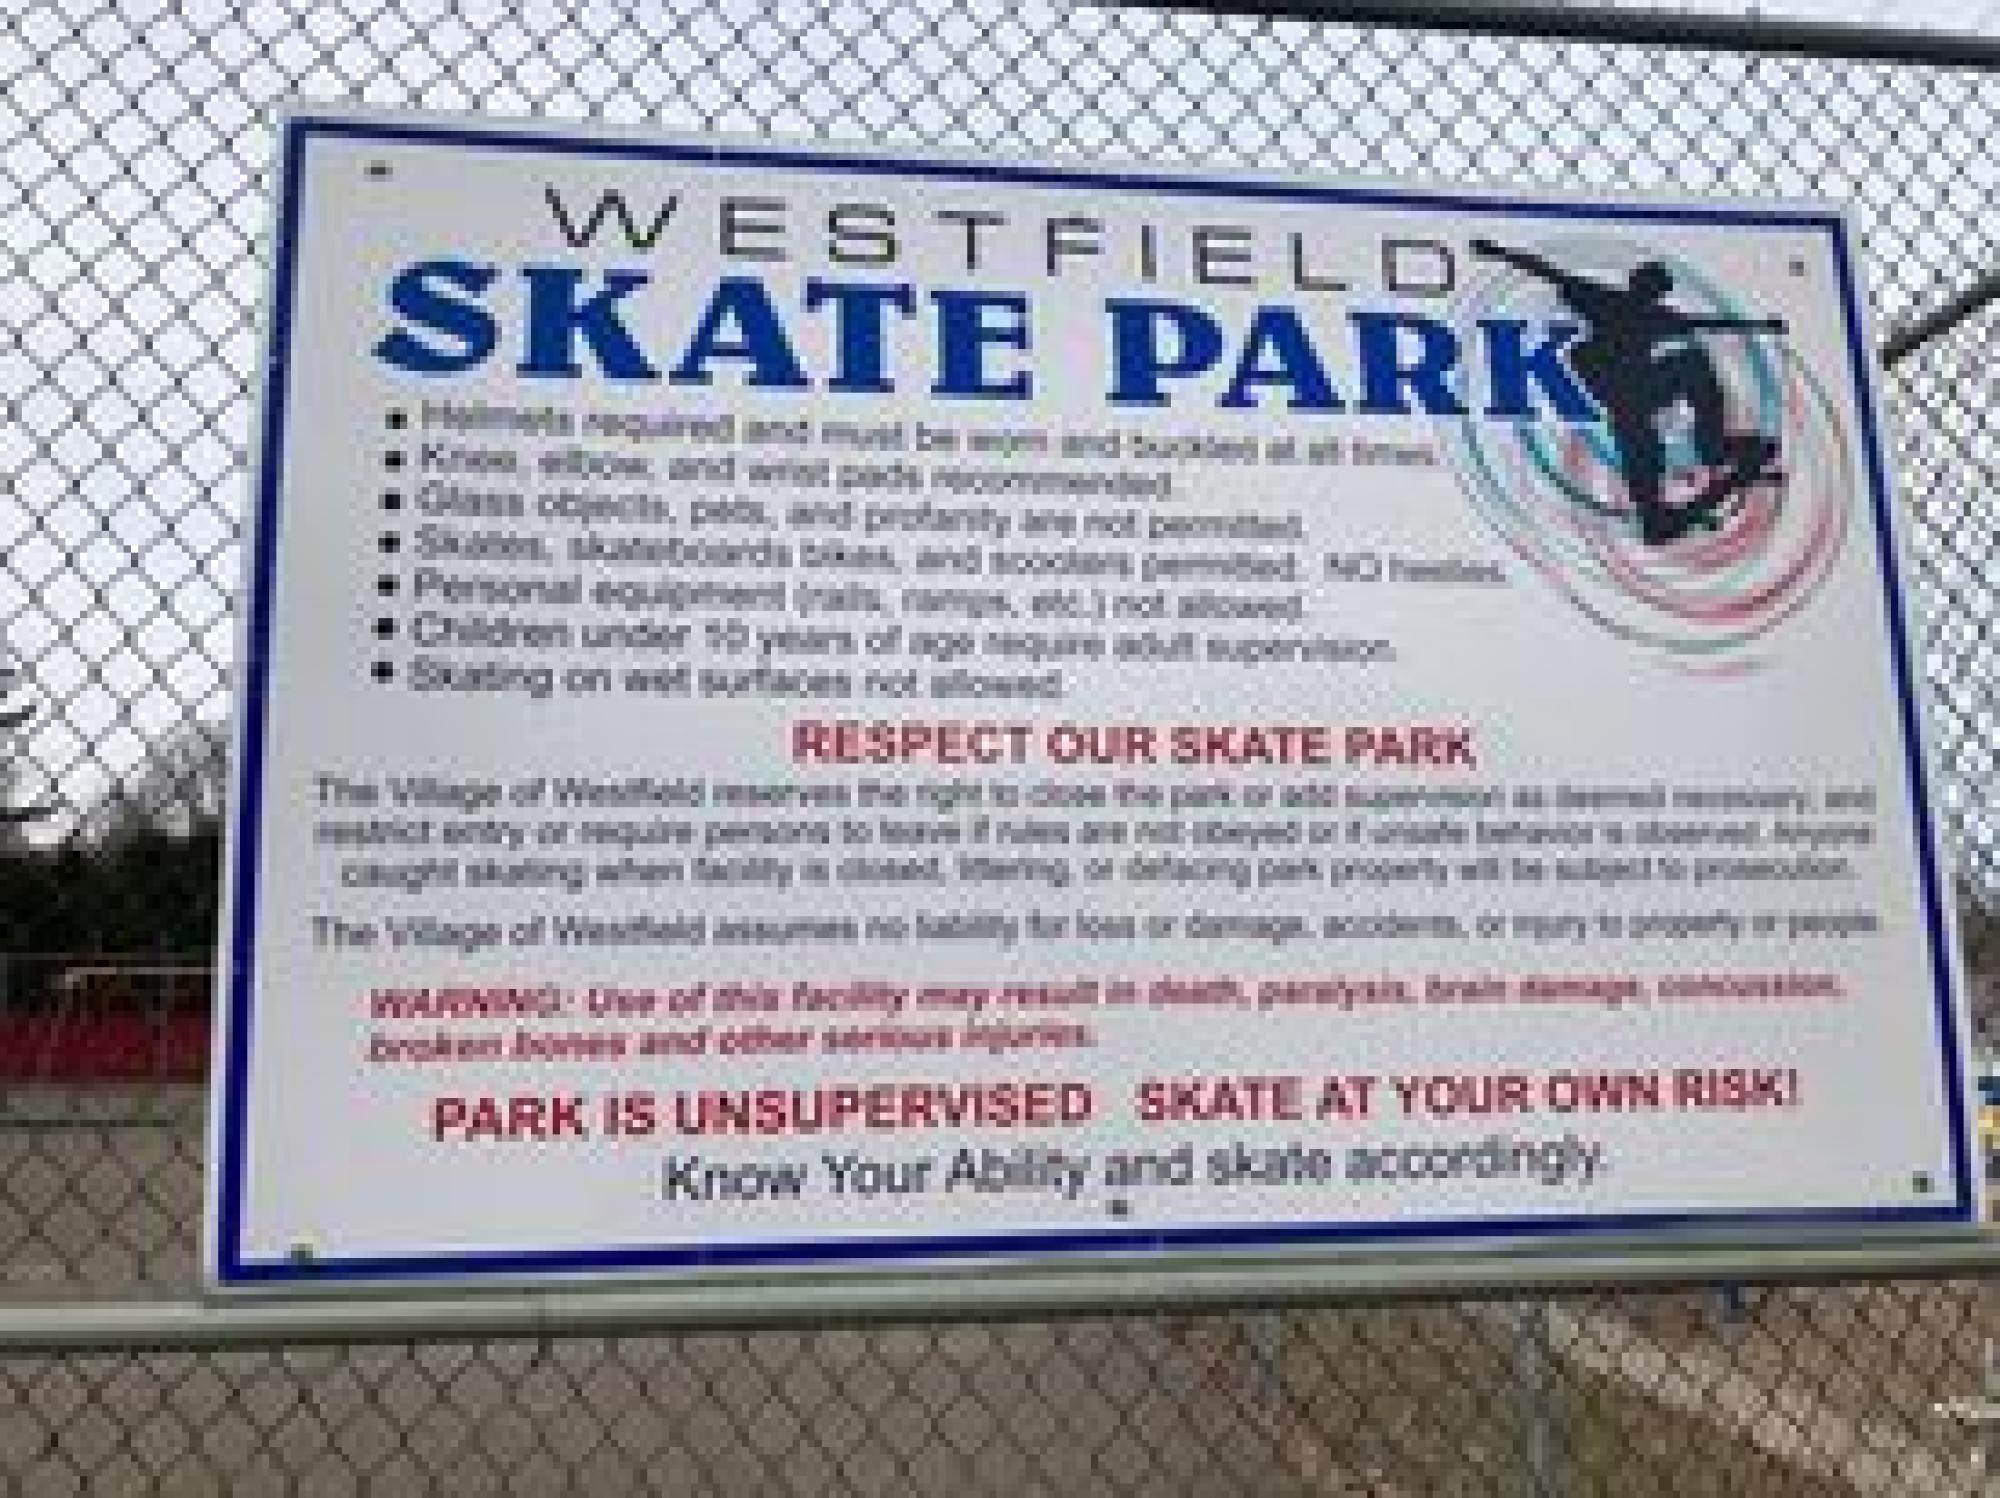 Westfield Skate Park